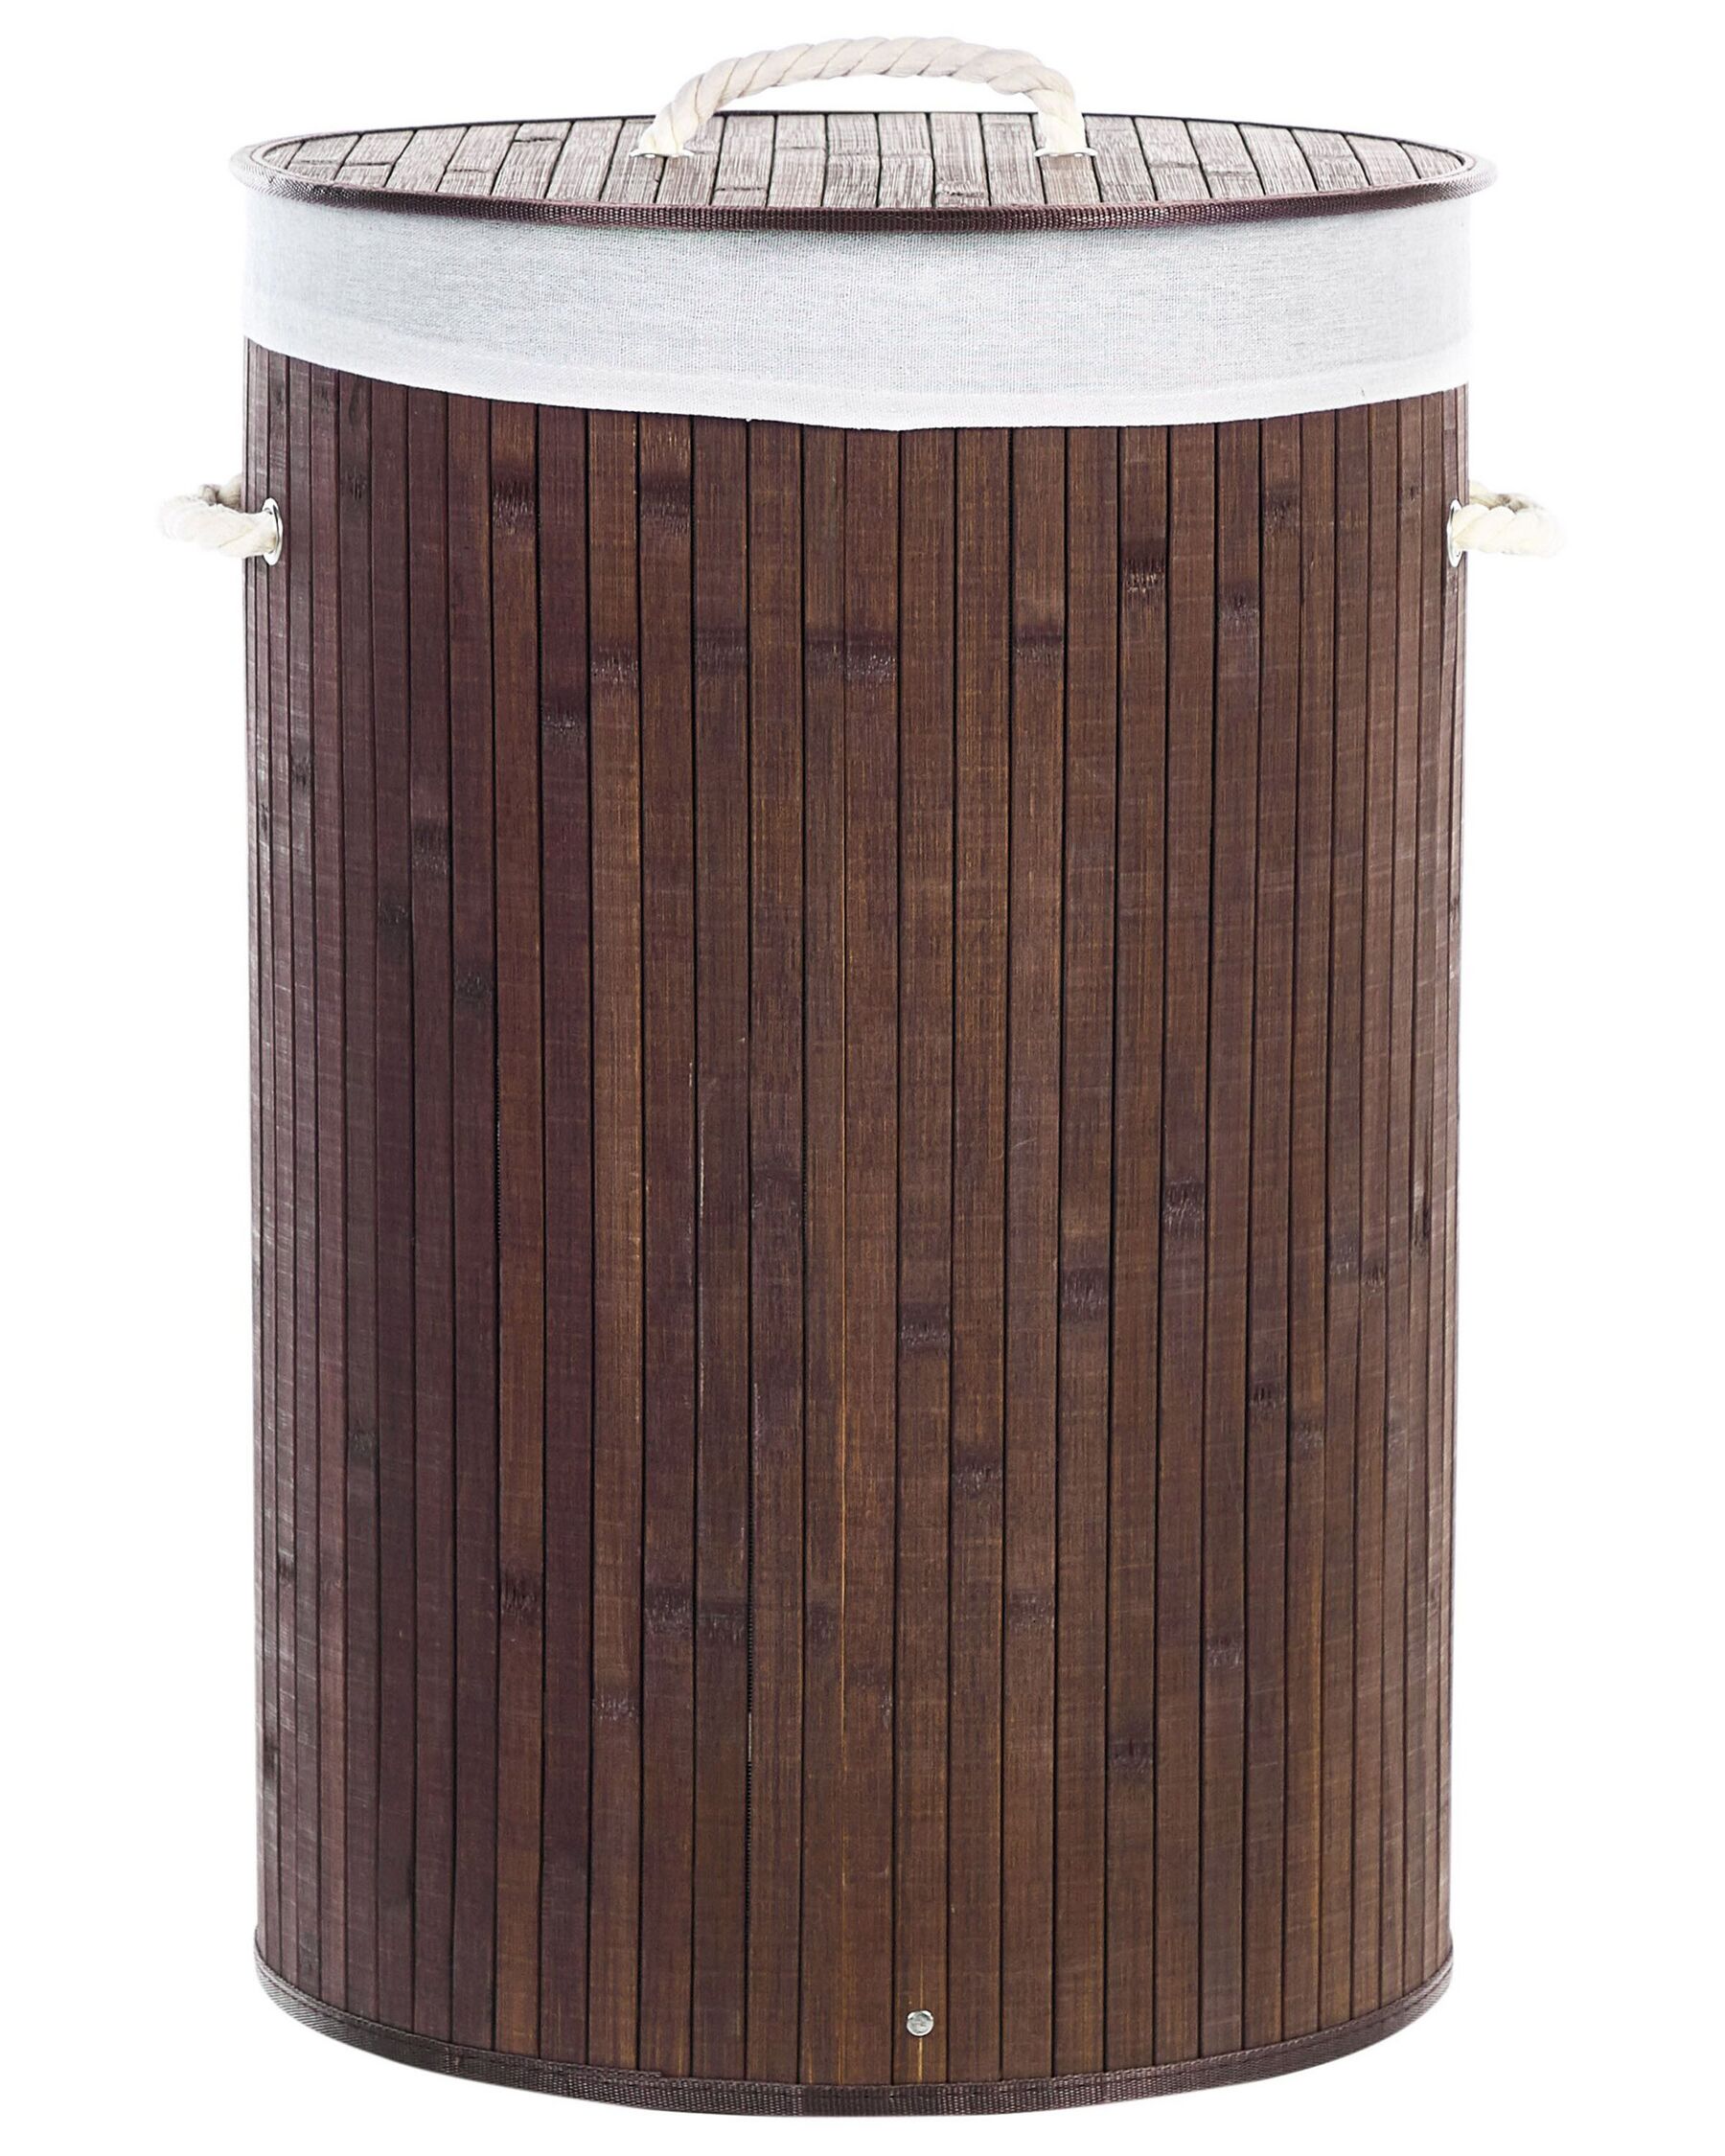 Cesta legno di bambù scuro e bianco 60 cm SANNAR_849844